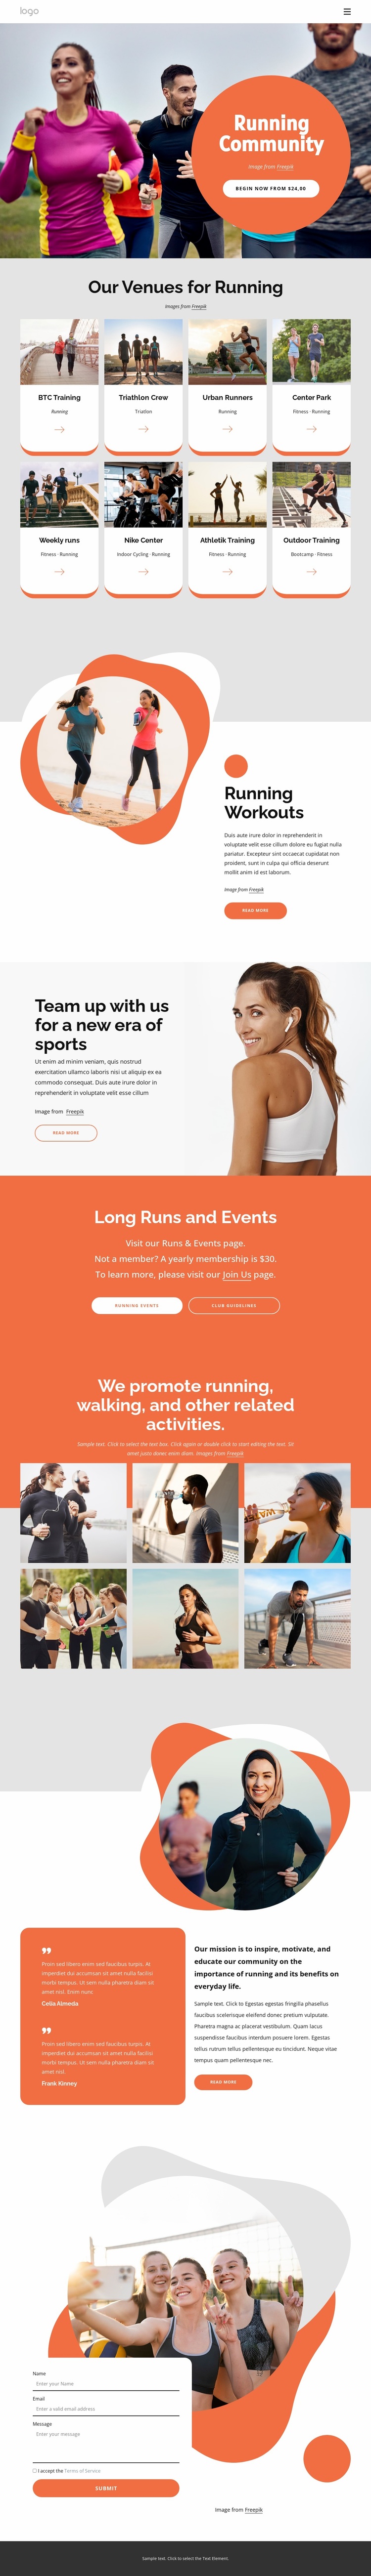 About Running Club Website Design